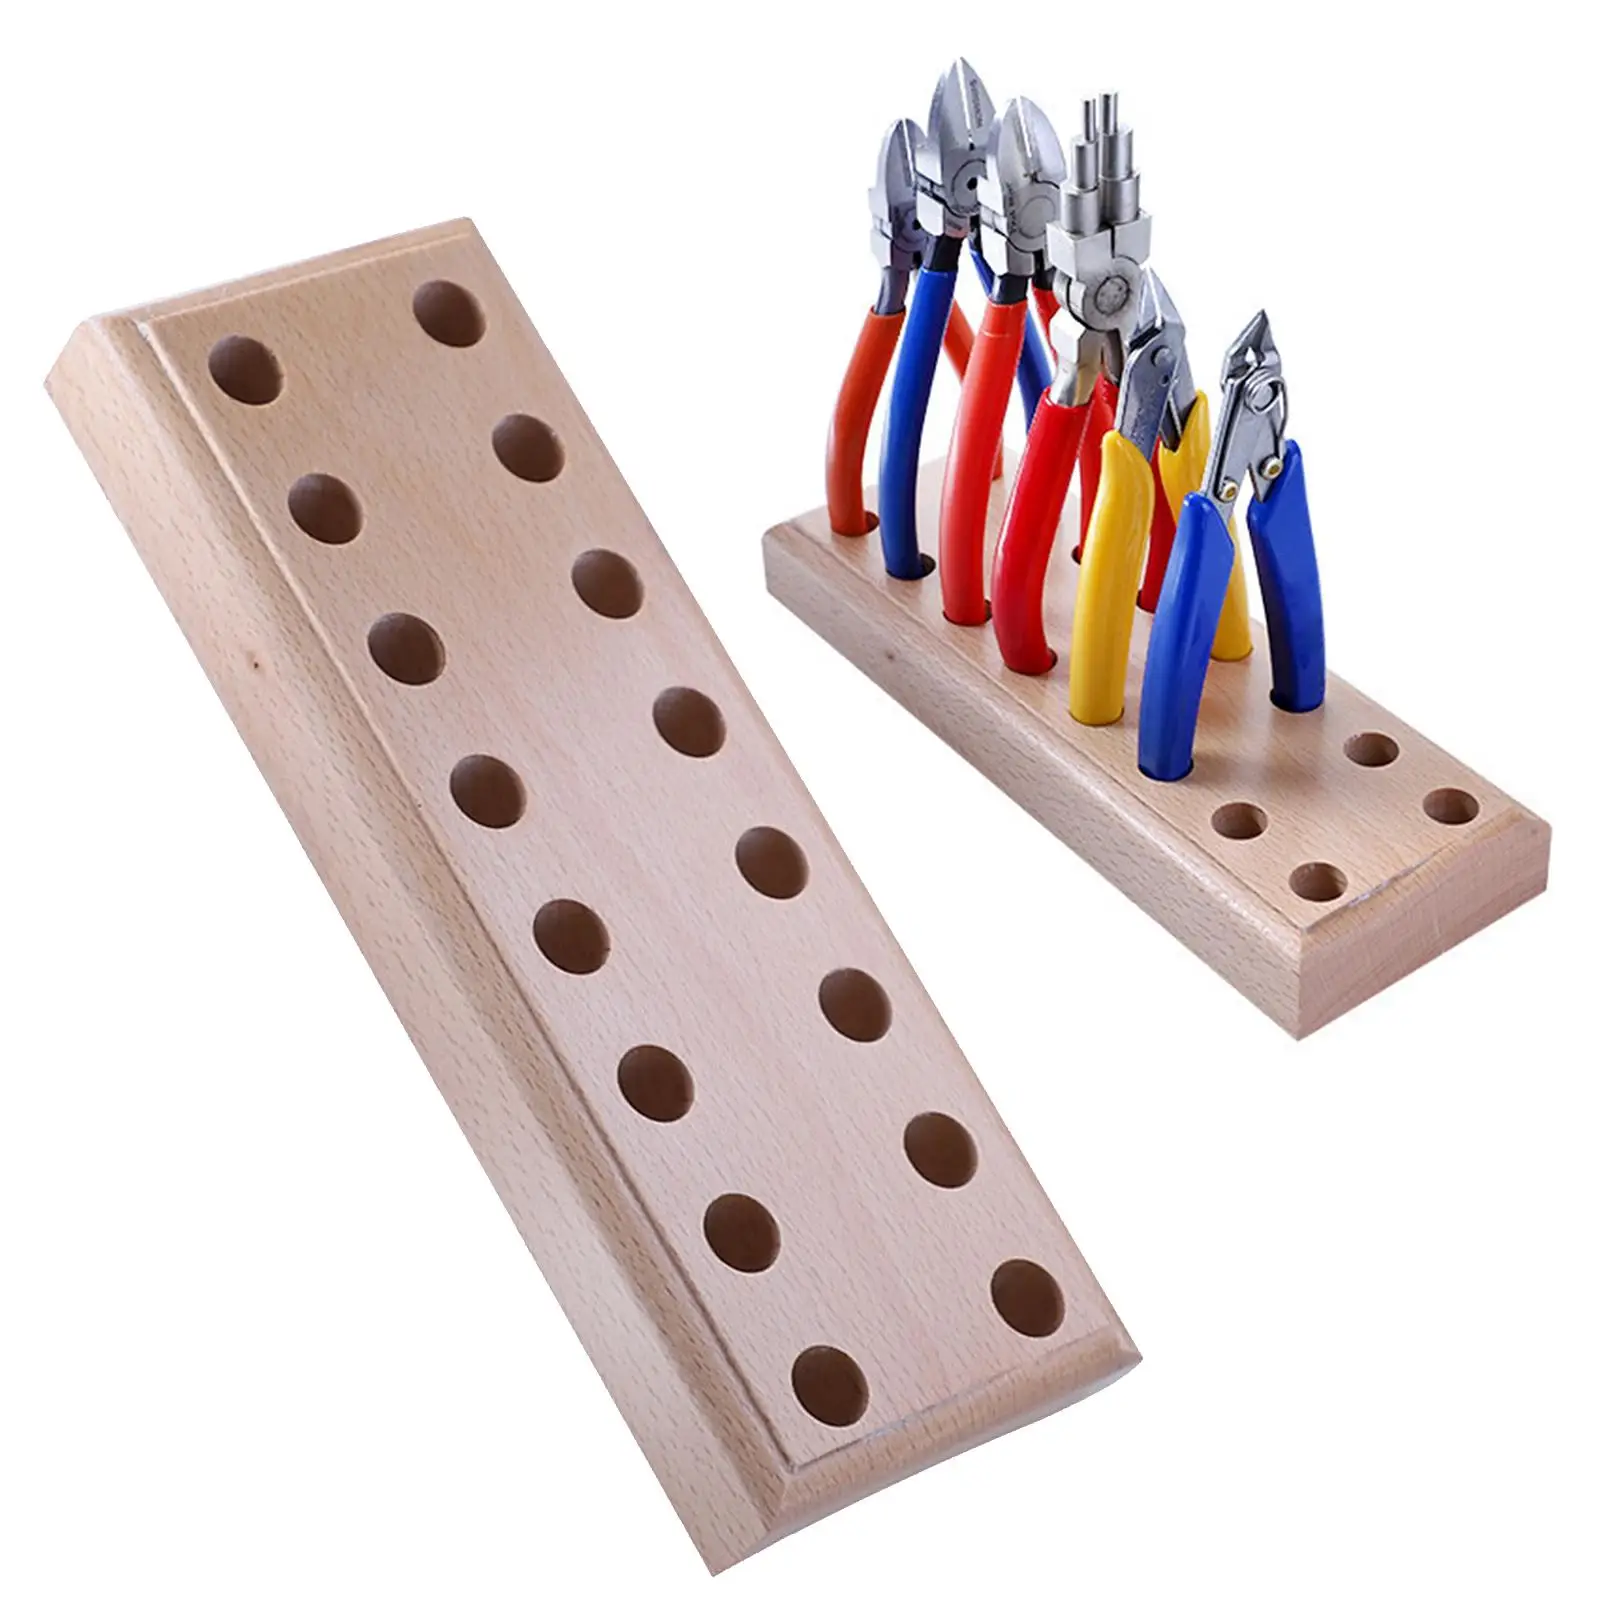 16 Holes Wood Plier Block Desktop Base Stand Tool Storage Wood Pallet Jewelry Making Supplies DIY Crafting Beading Accs